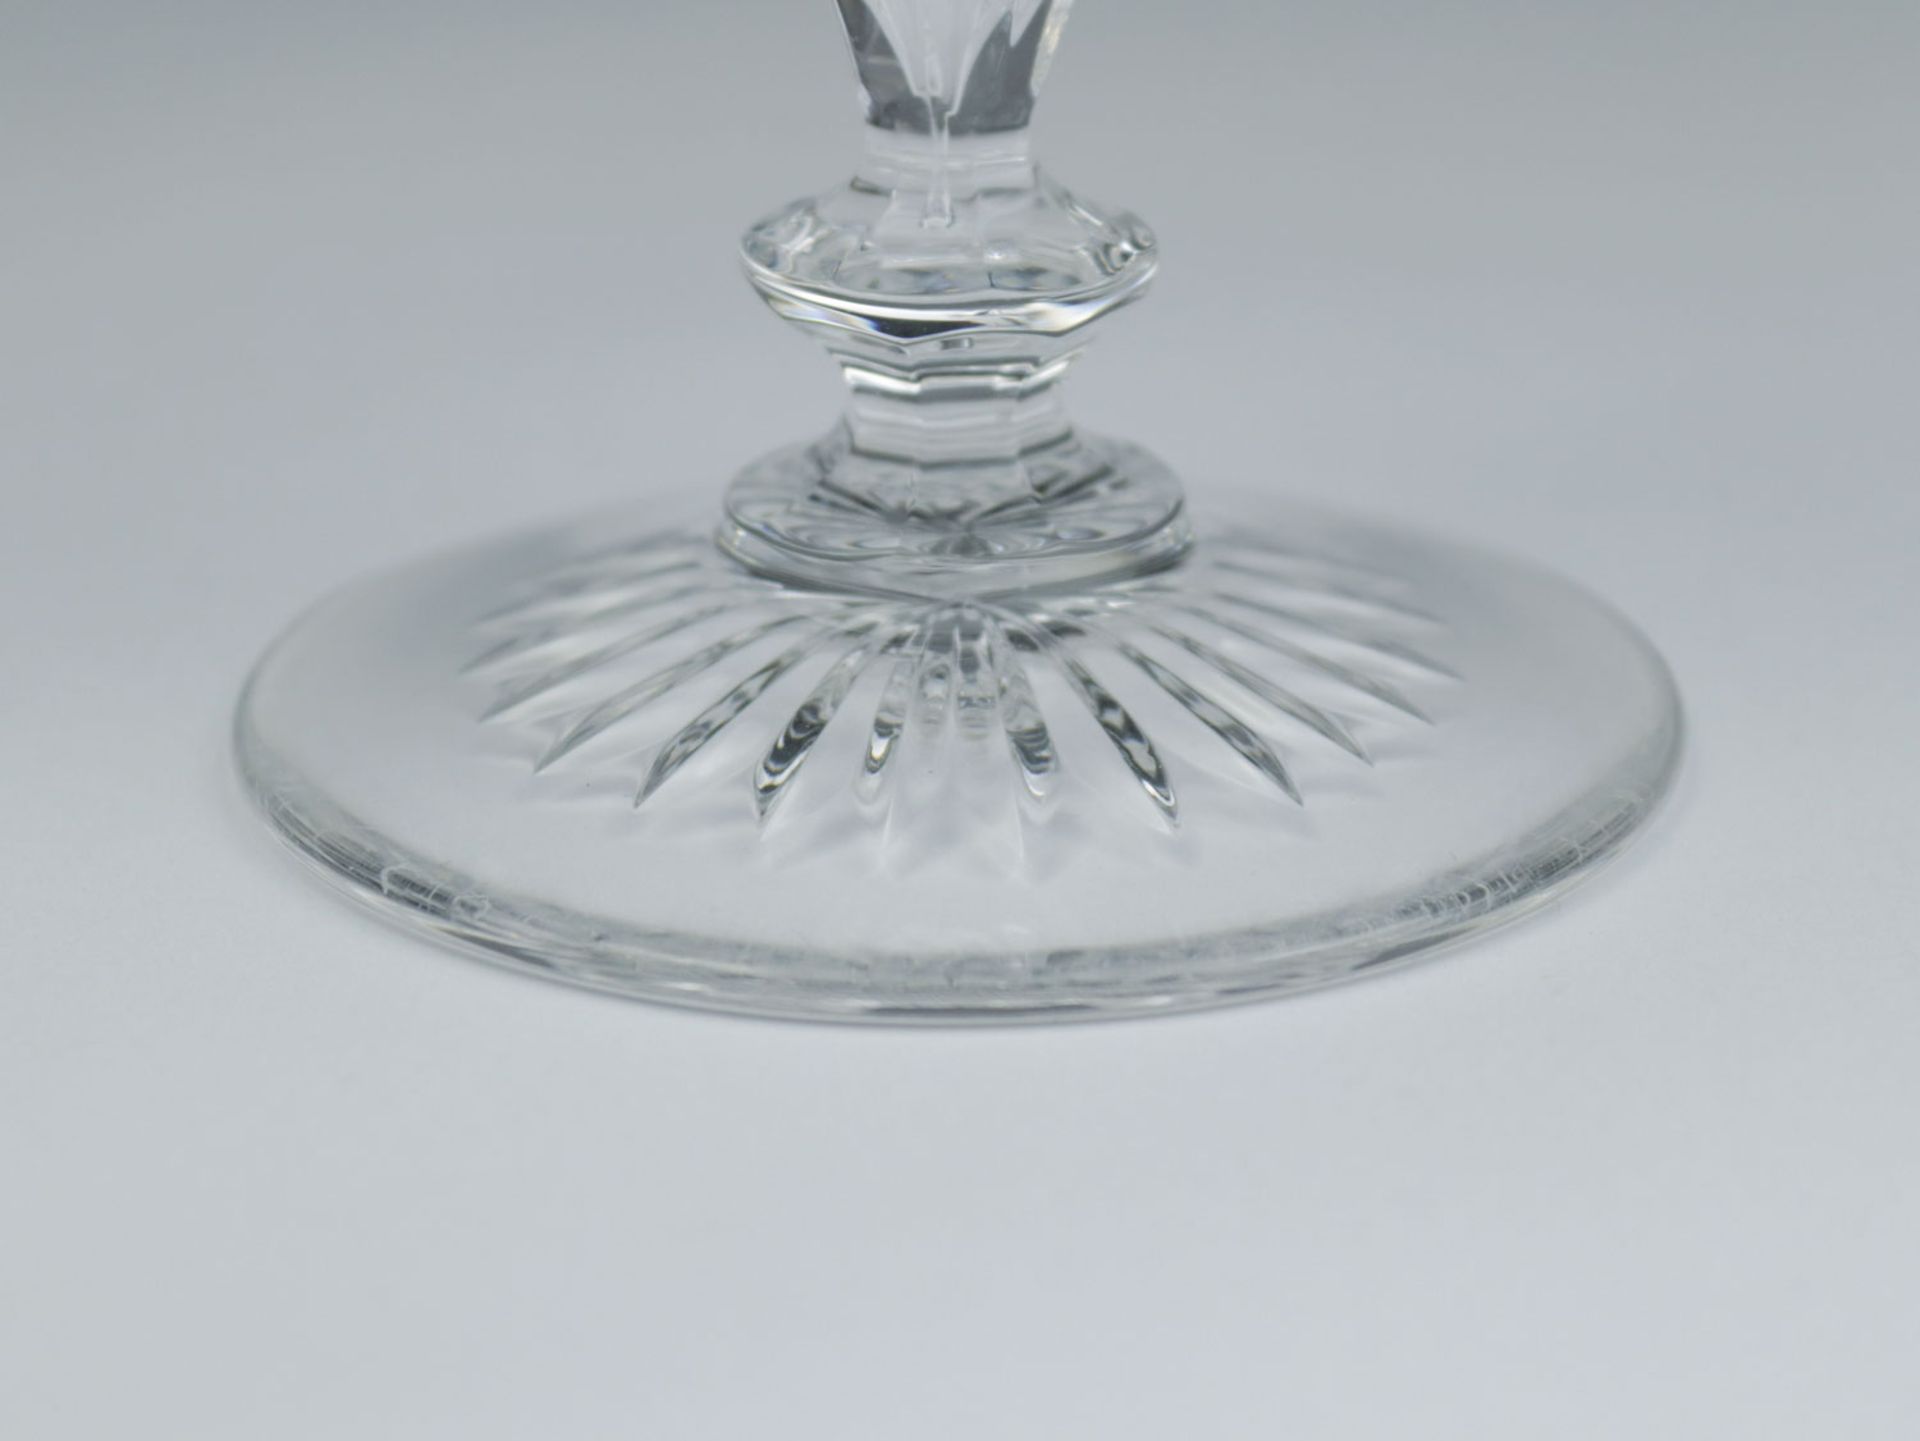 Wappenglas - Image 4 of 4